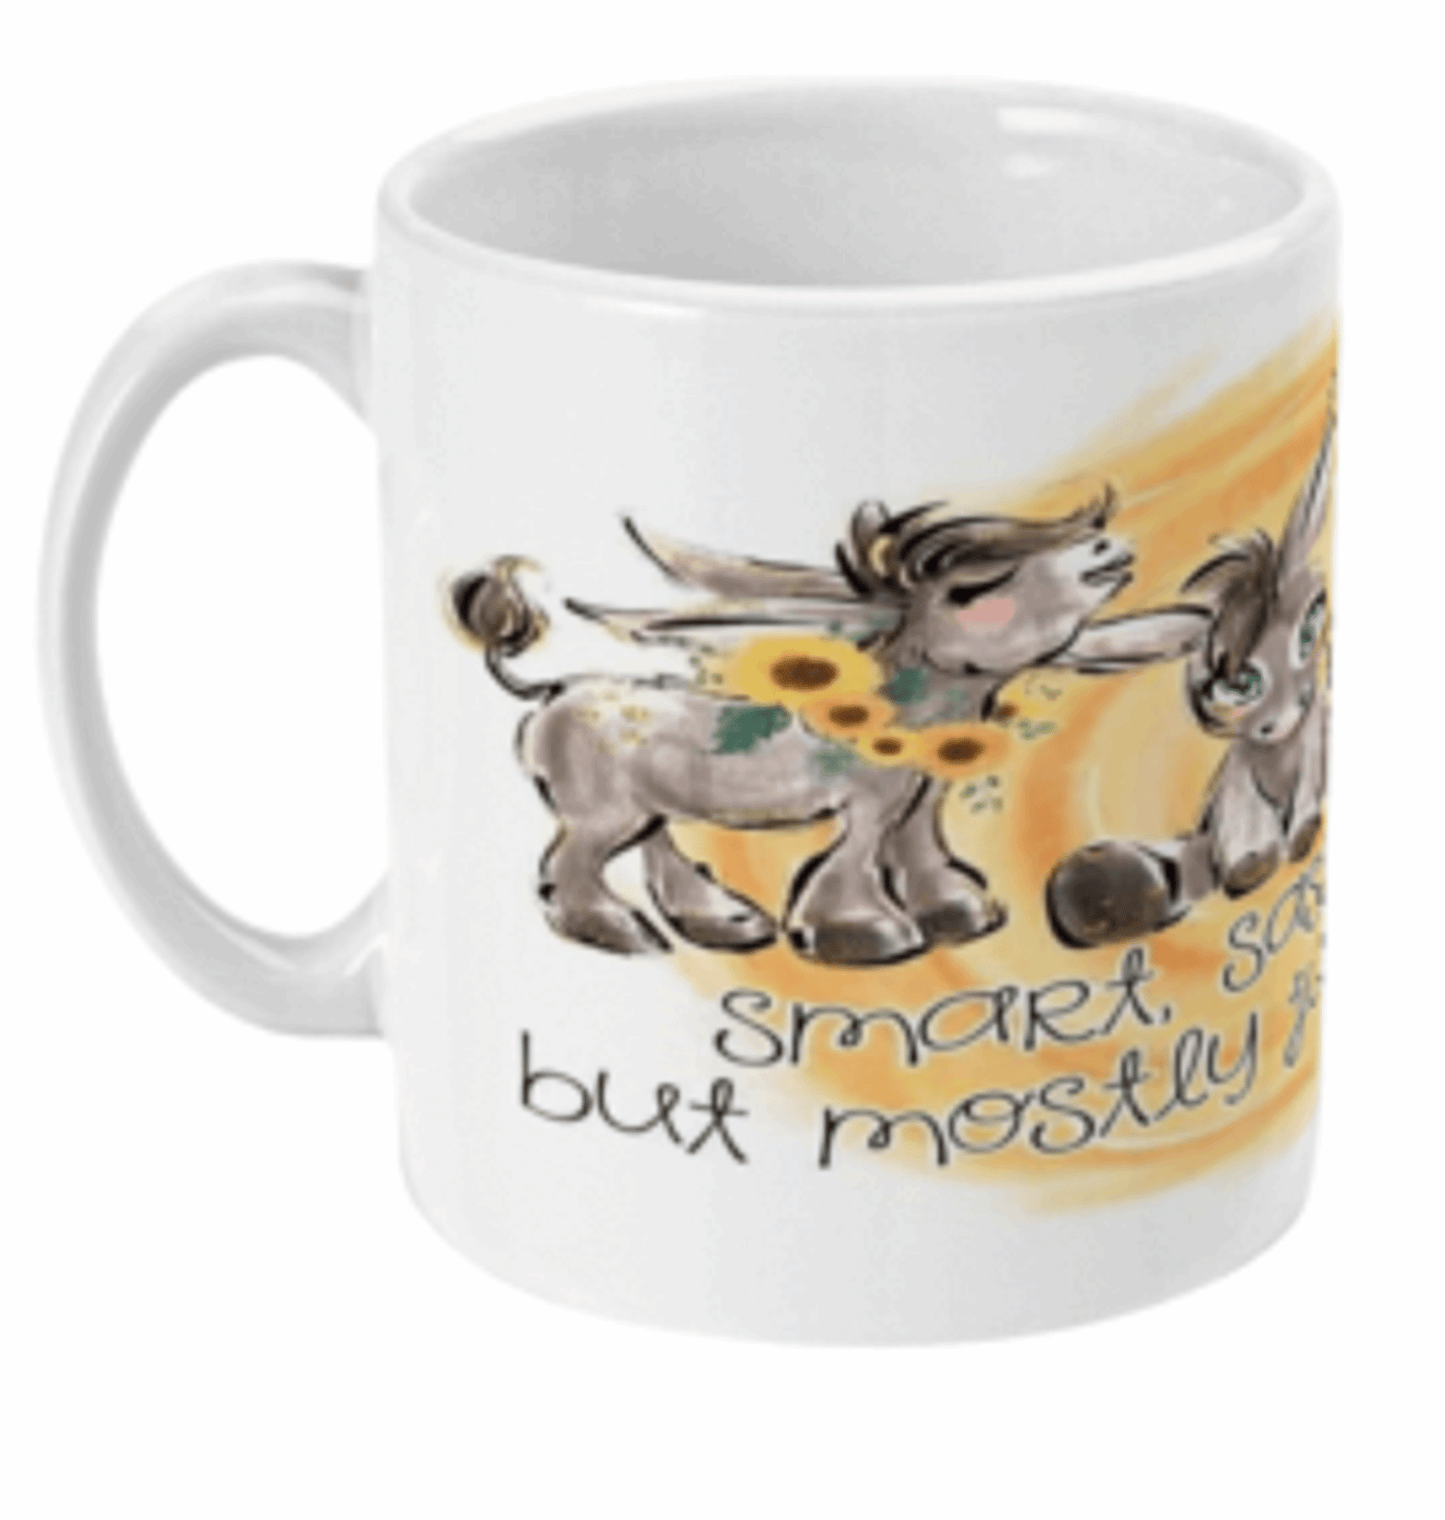  Smart Sassy and Classy Mules Coffee Mug by Free Spirit Accessories sold by Free Spirit Accessories